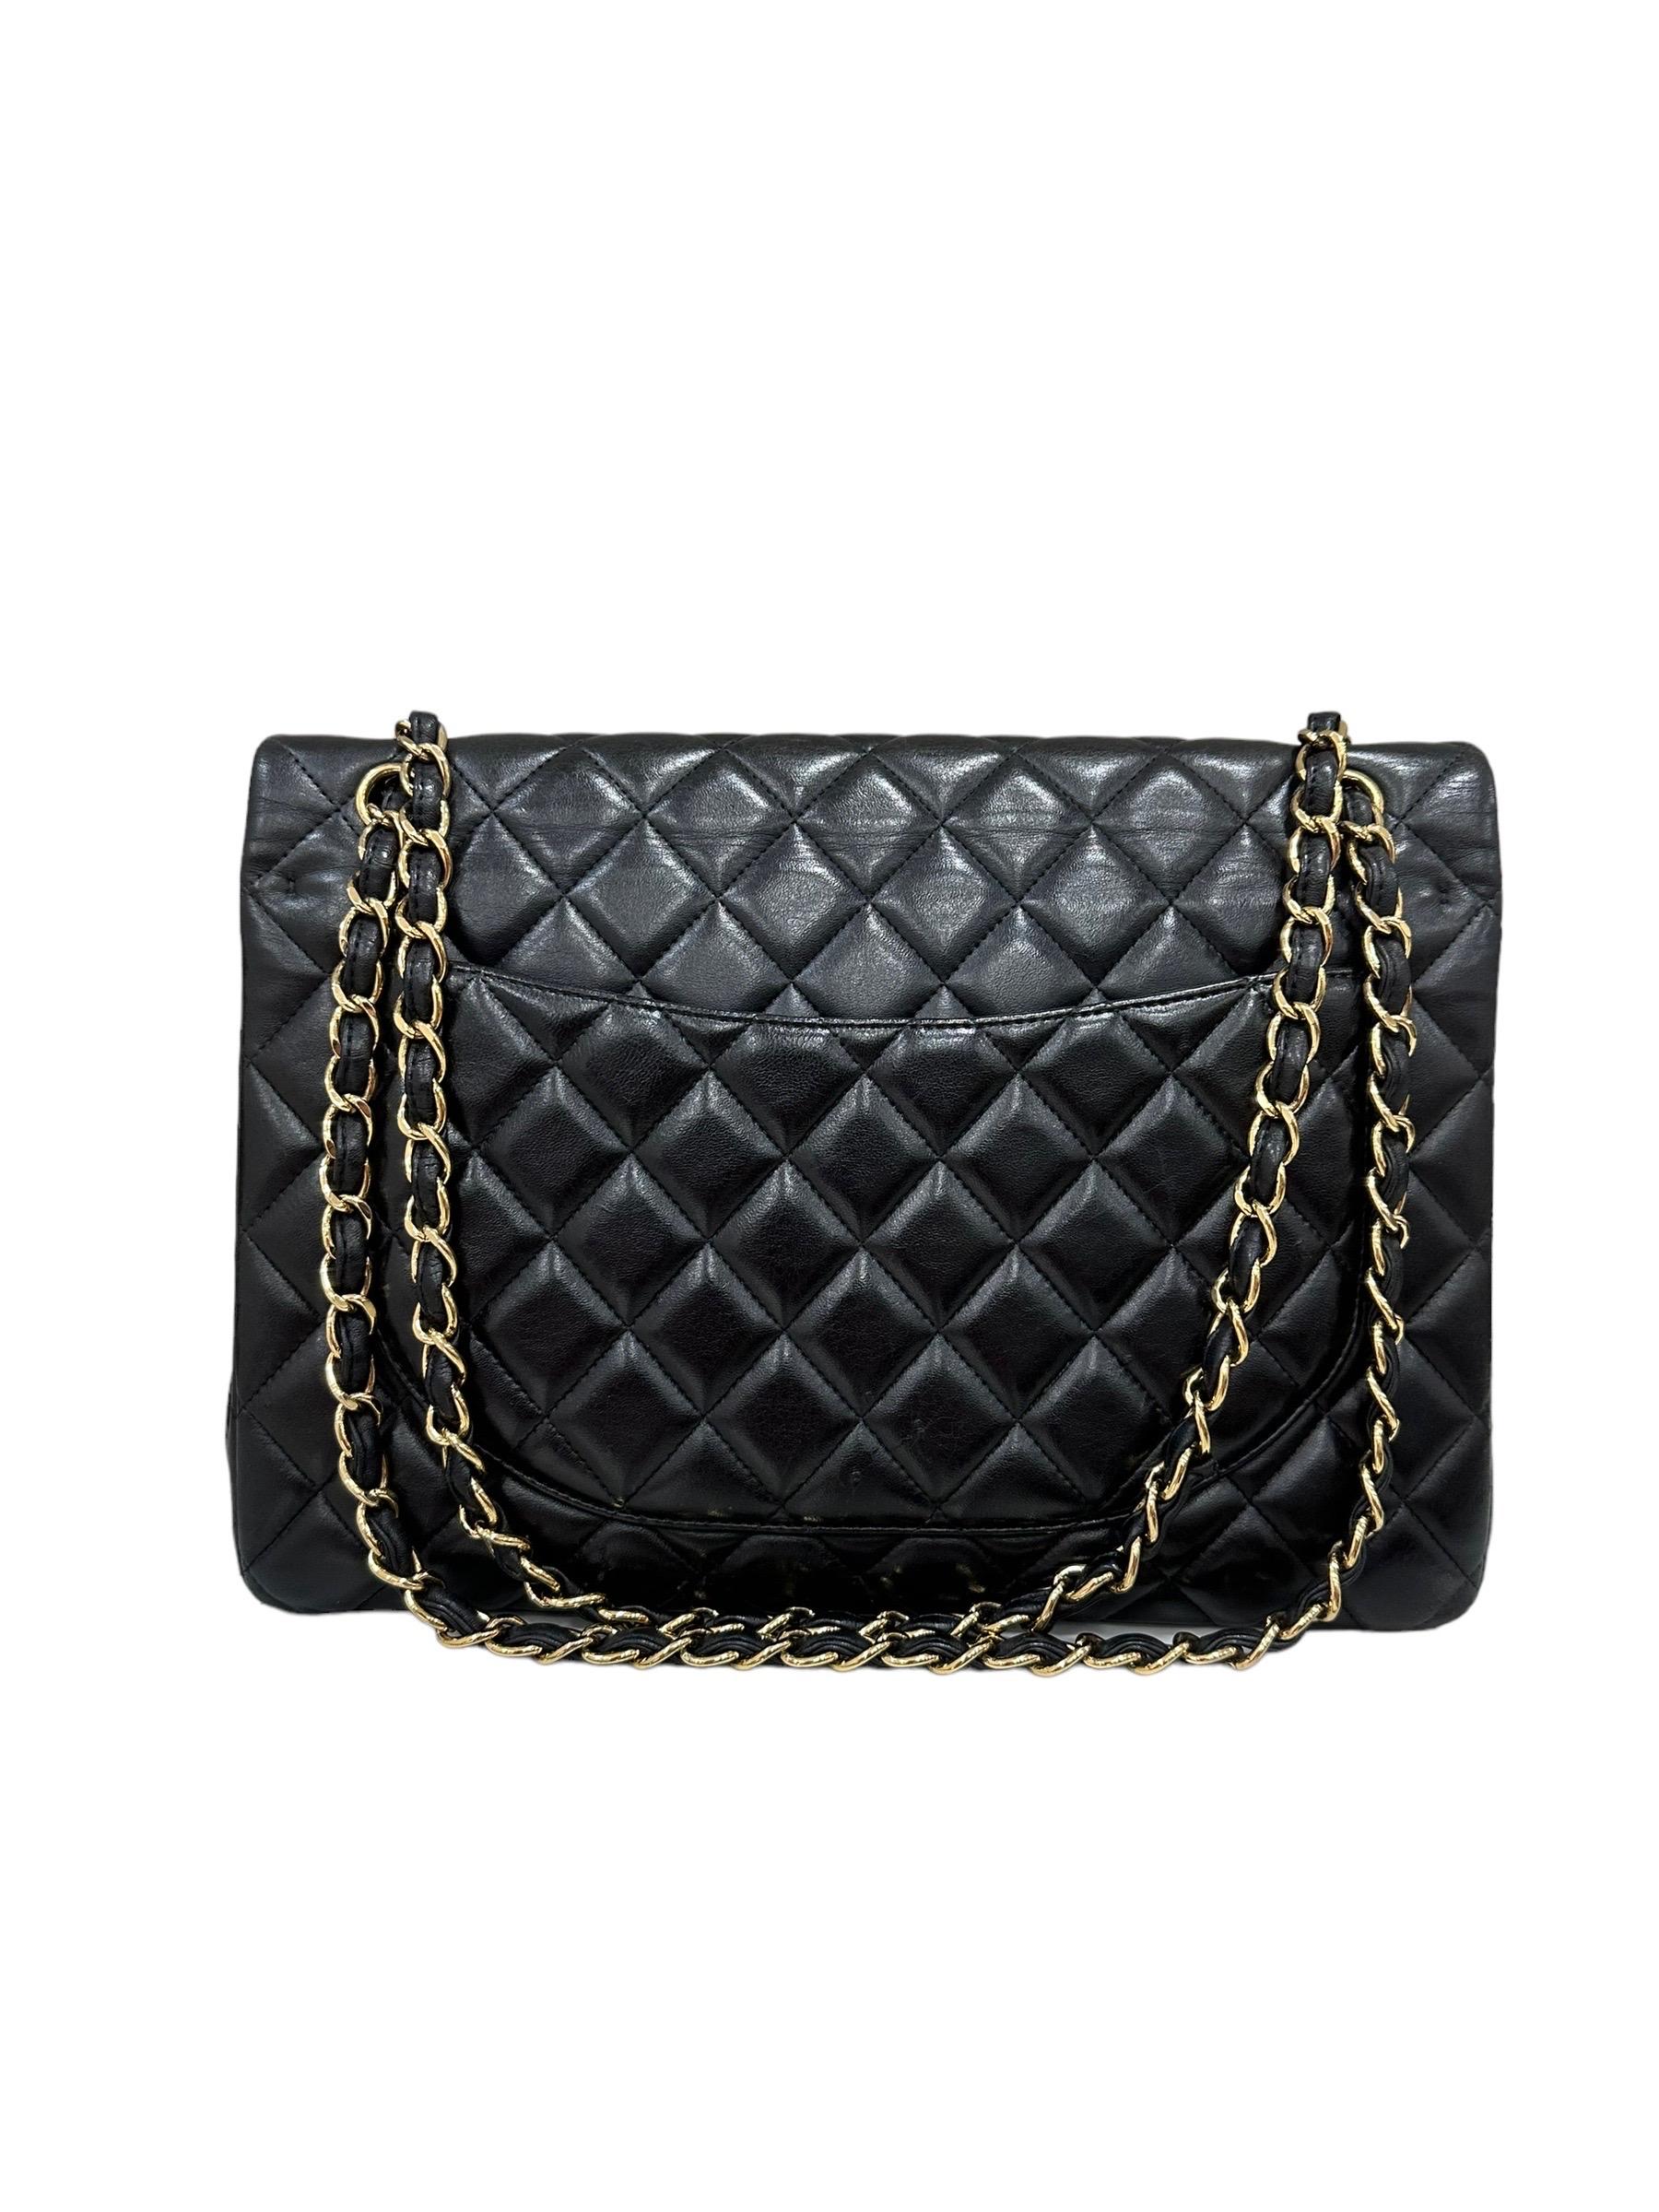 Women's or Men's 2011 Chanel Timeless Maxi Jumbo Black Leather Top Shoulder Bag For Sale